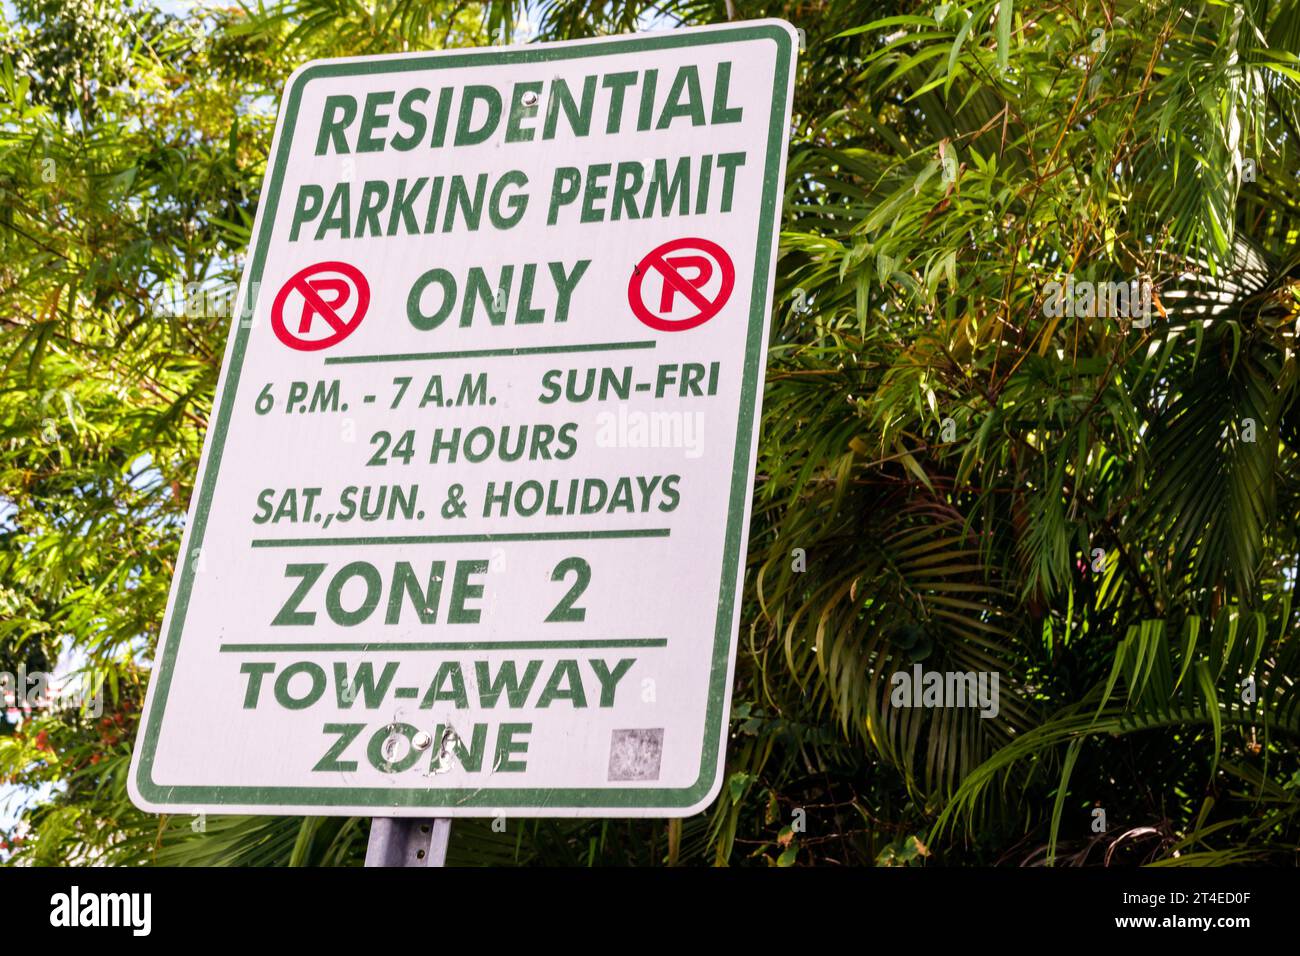 Miami Beach Florida,residential parking permit only tow-away zone sign Stock Photo